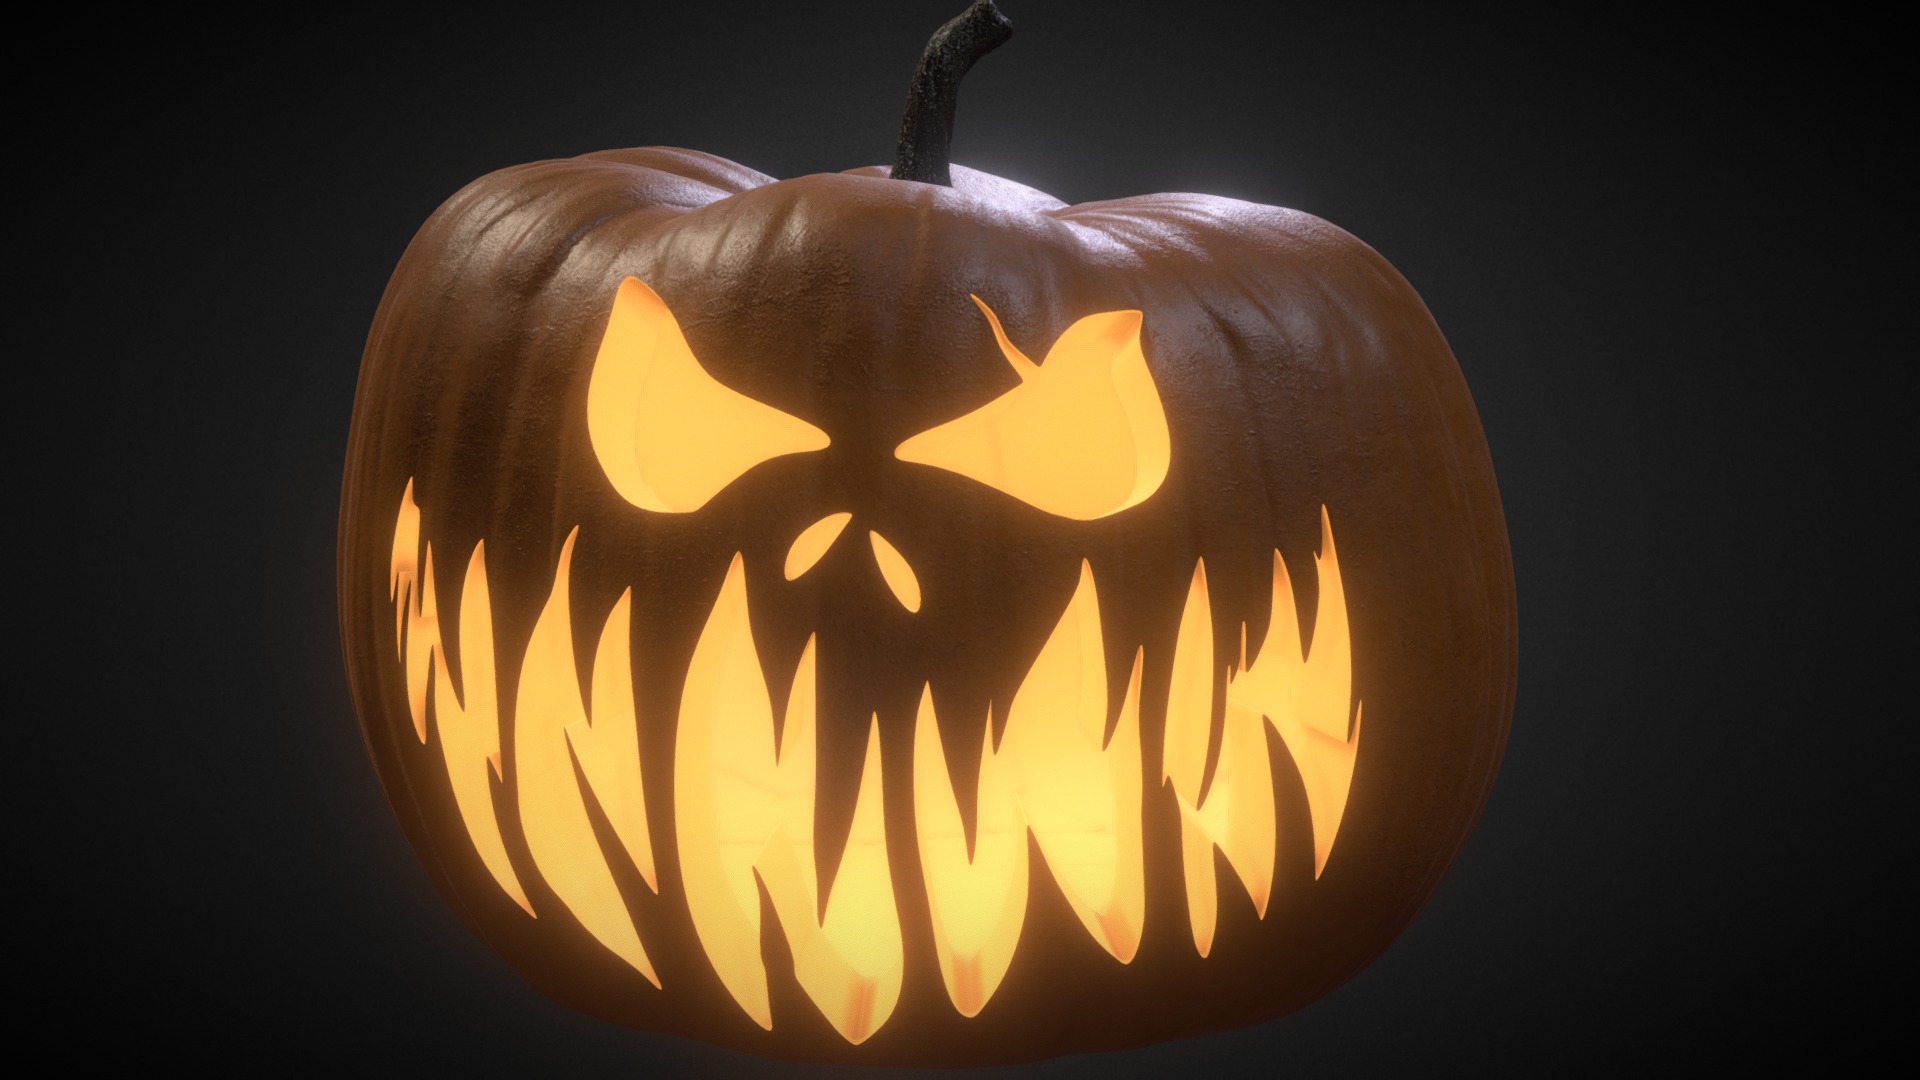 3D model Halloween Pumpkin – Jack-o-lantern 2 - This is a 3D model of the Halloween Pumpkin - Jack-o-lantern 2. The 3D model is about a carved pumpkin with a face.